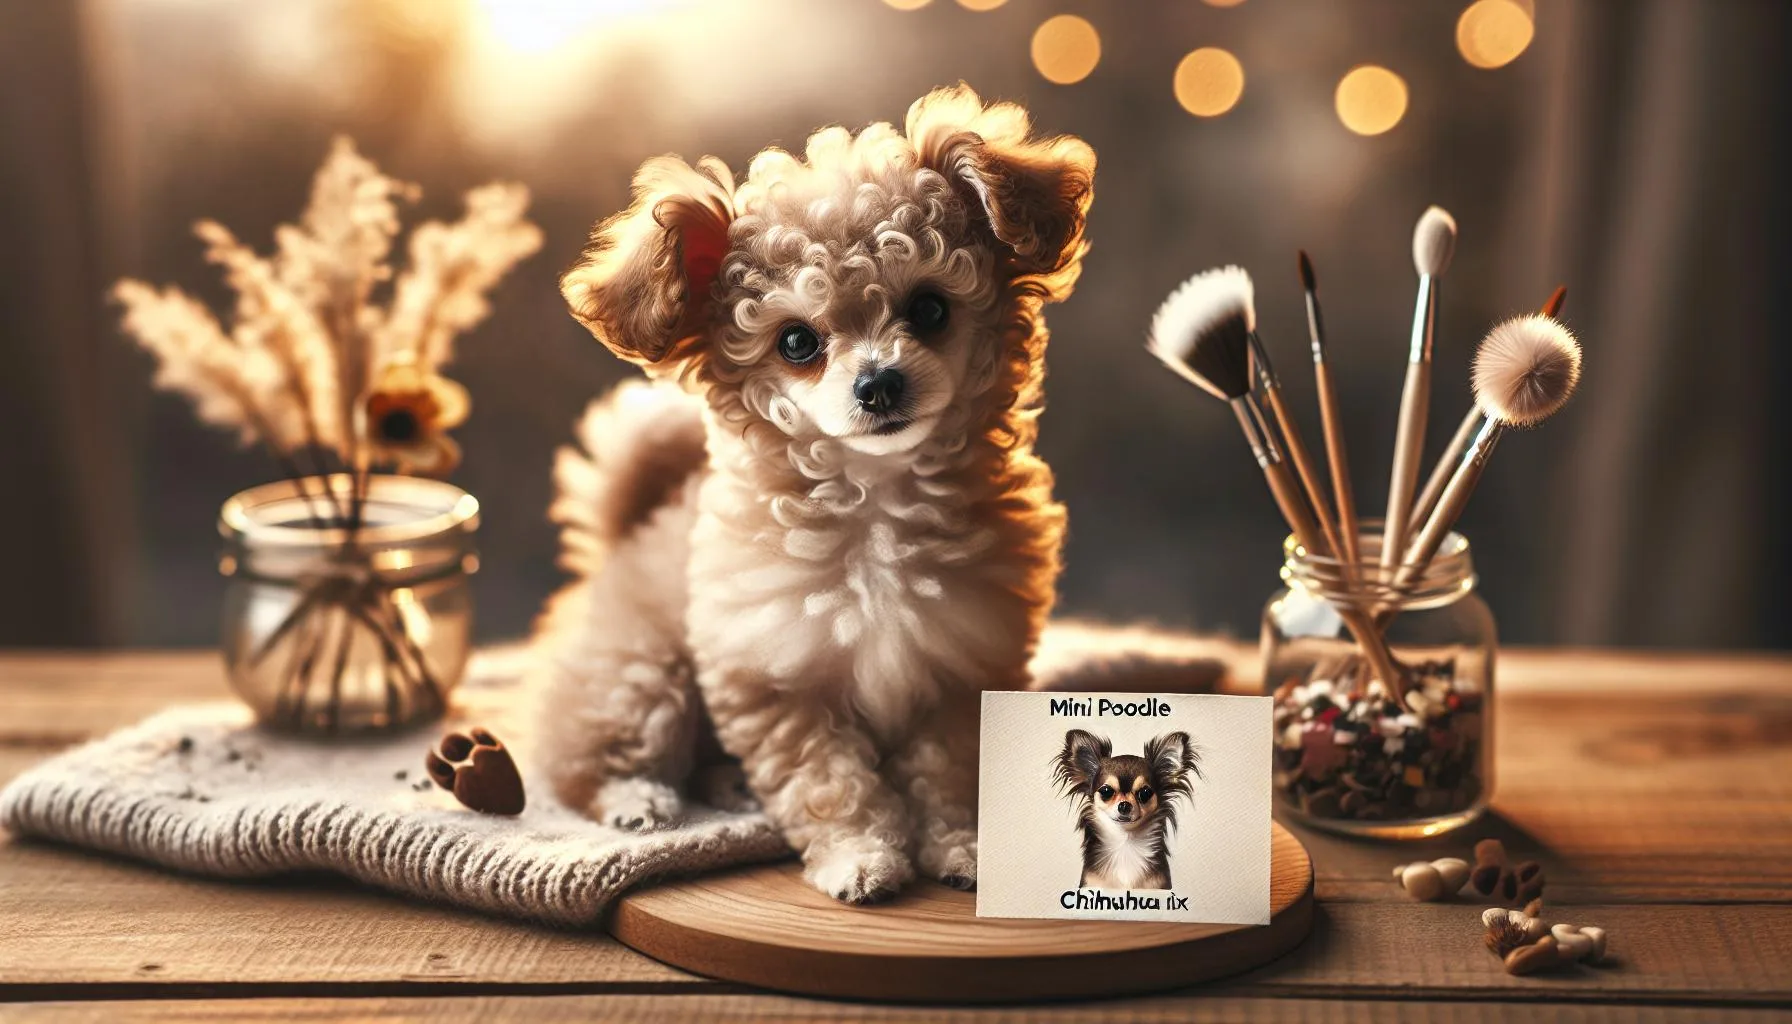 Mini Poodle Chihuahua Mix: Adopt Now!